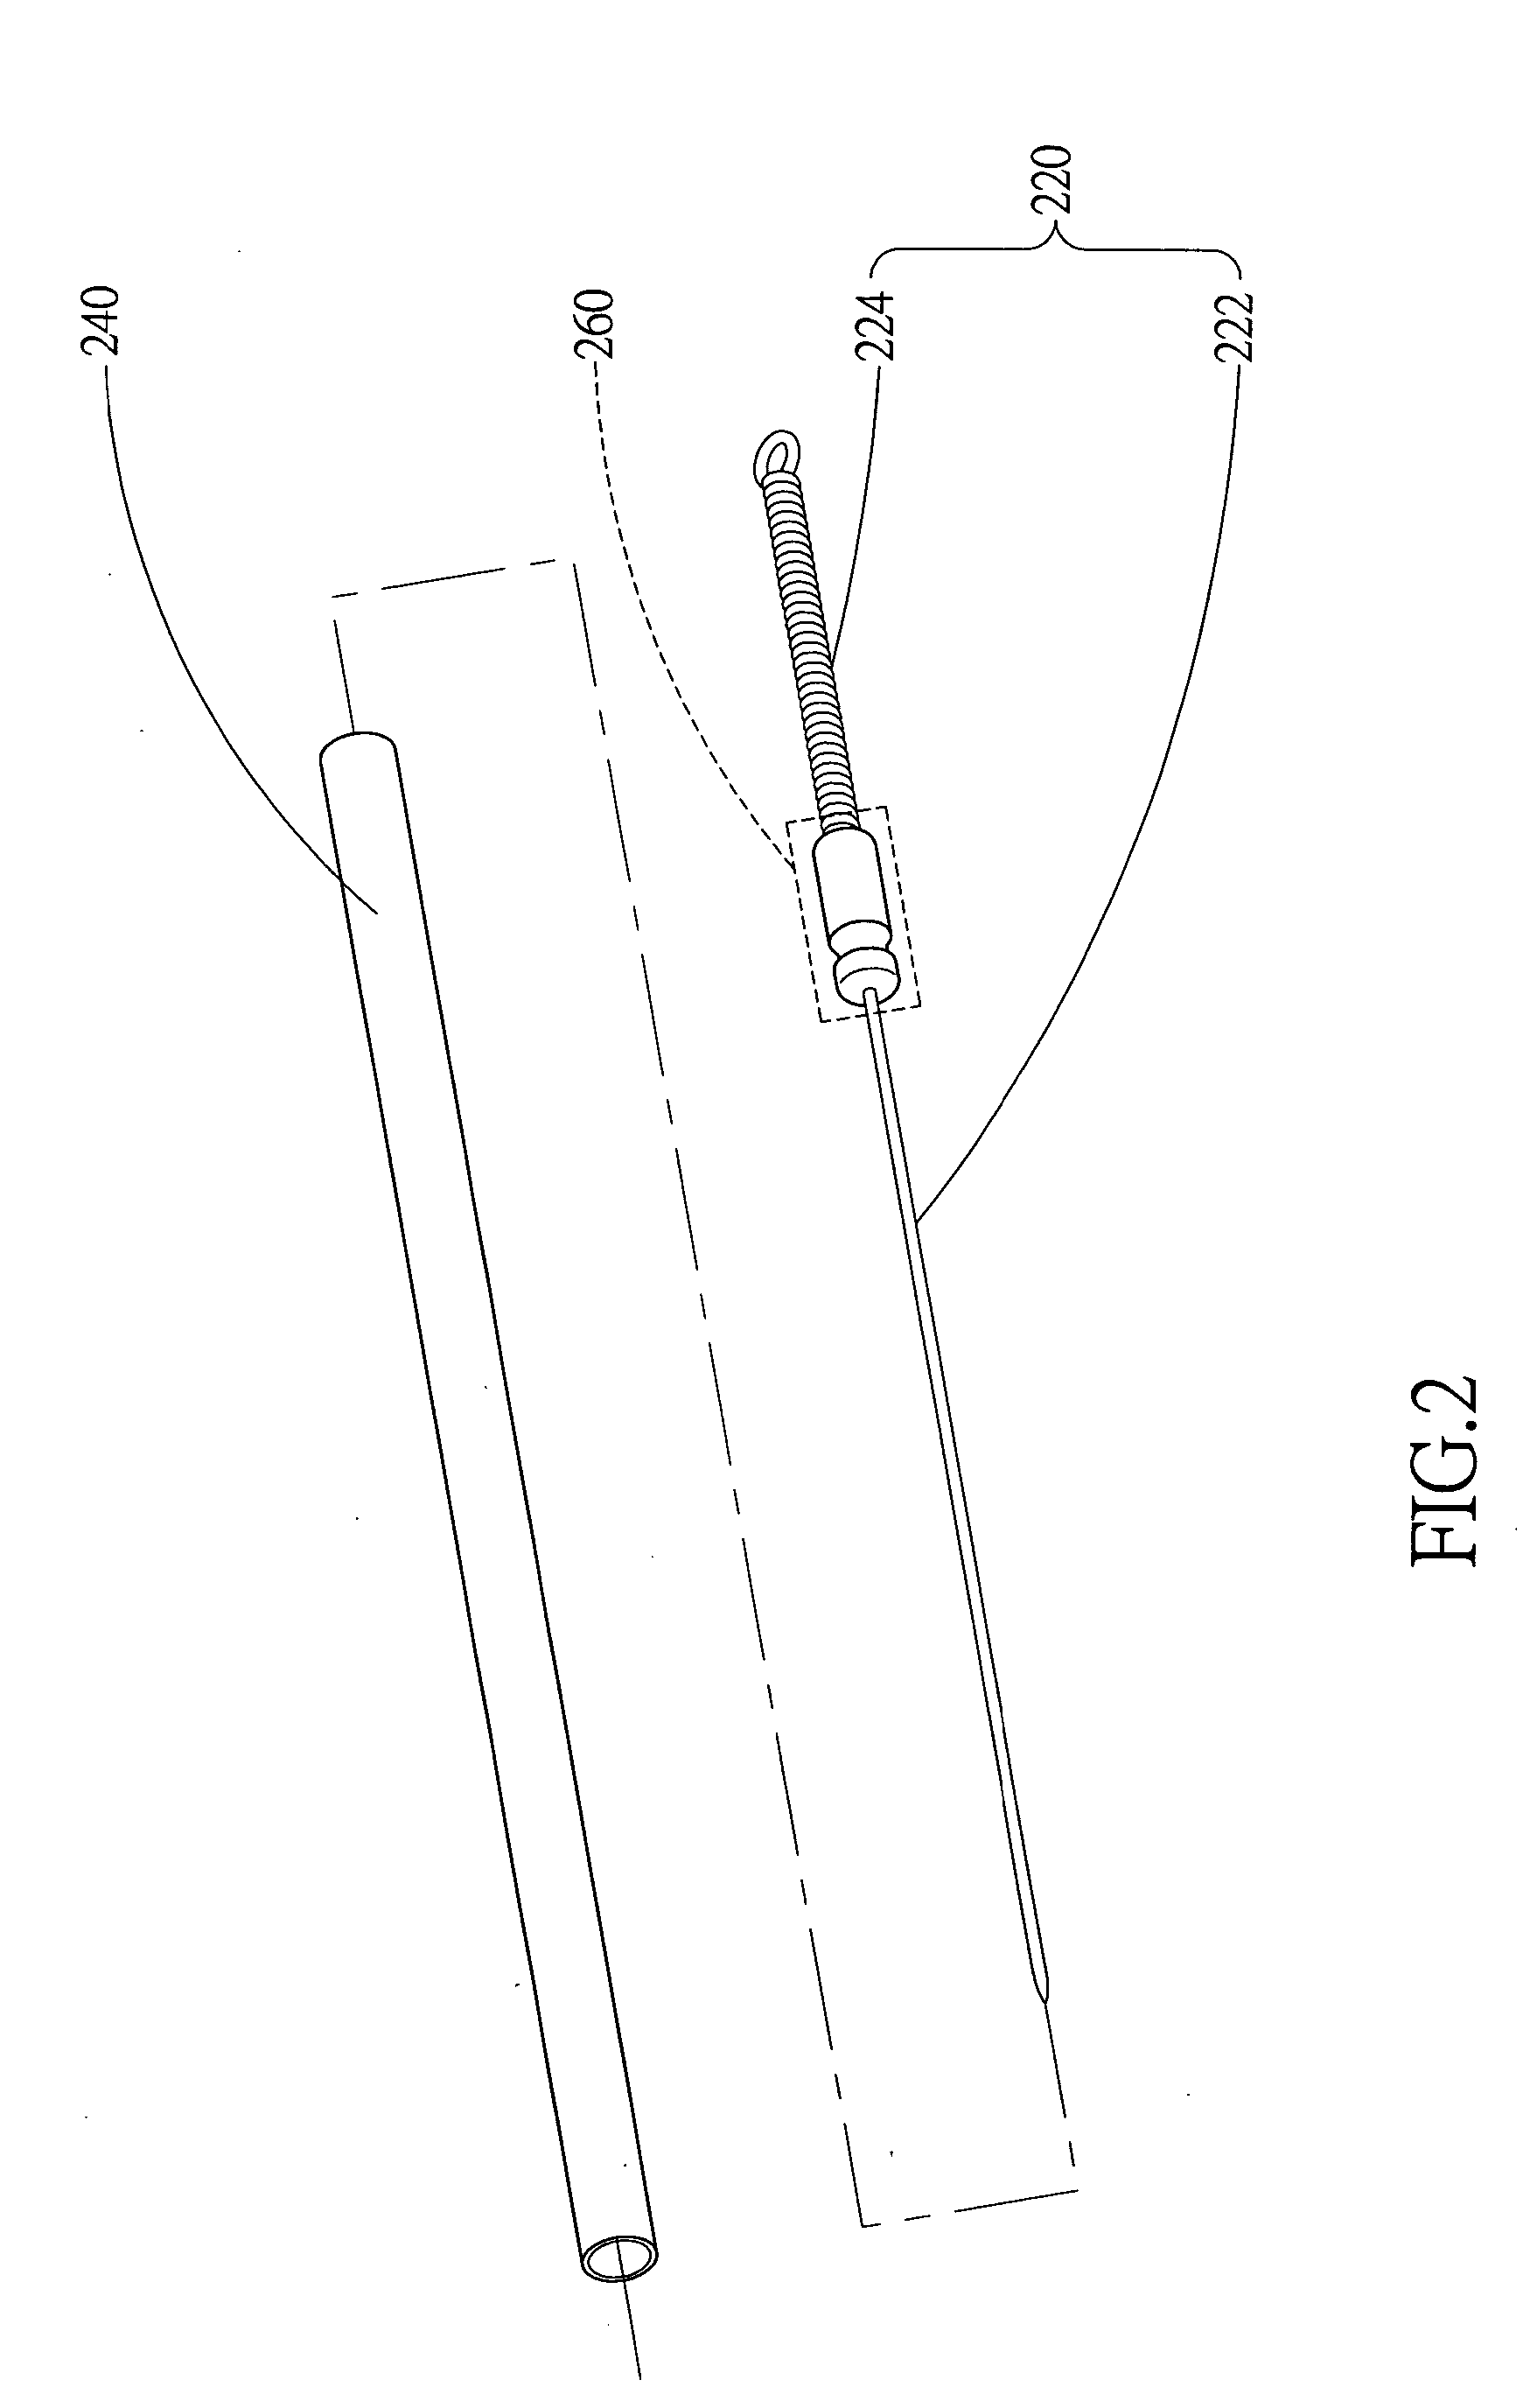 Apparatus for acupuncture needle set